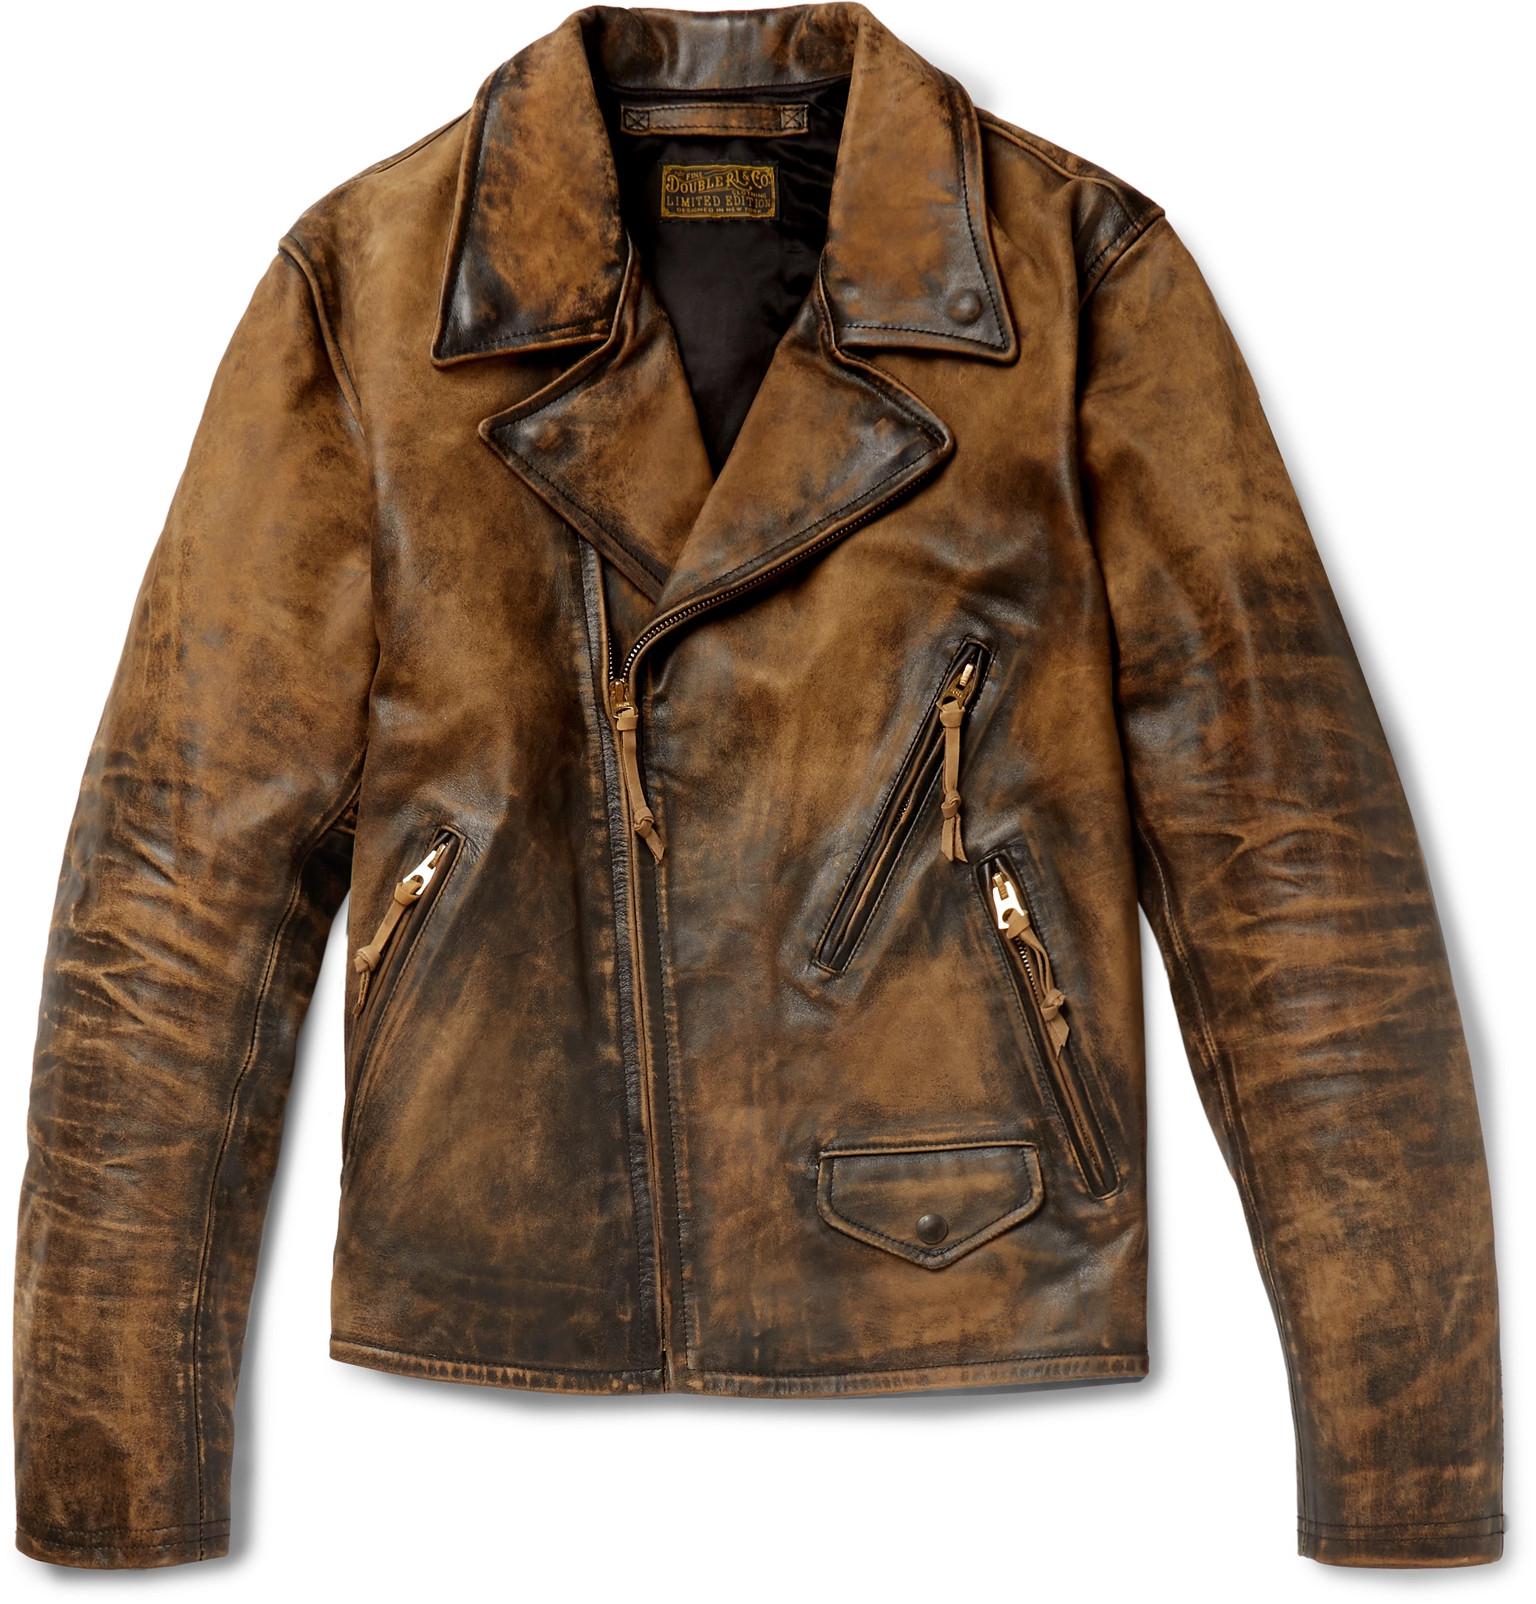 RRL Distressed Leather Biker Jacket in Brown for Men - Lyst